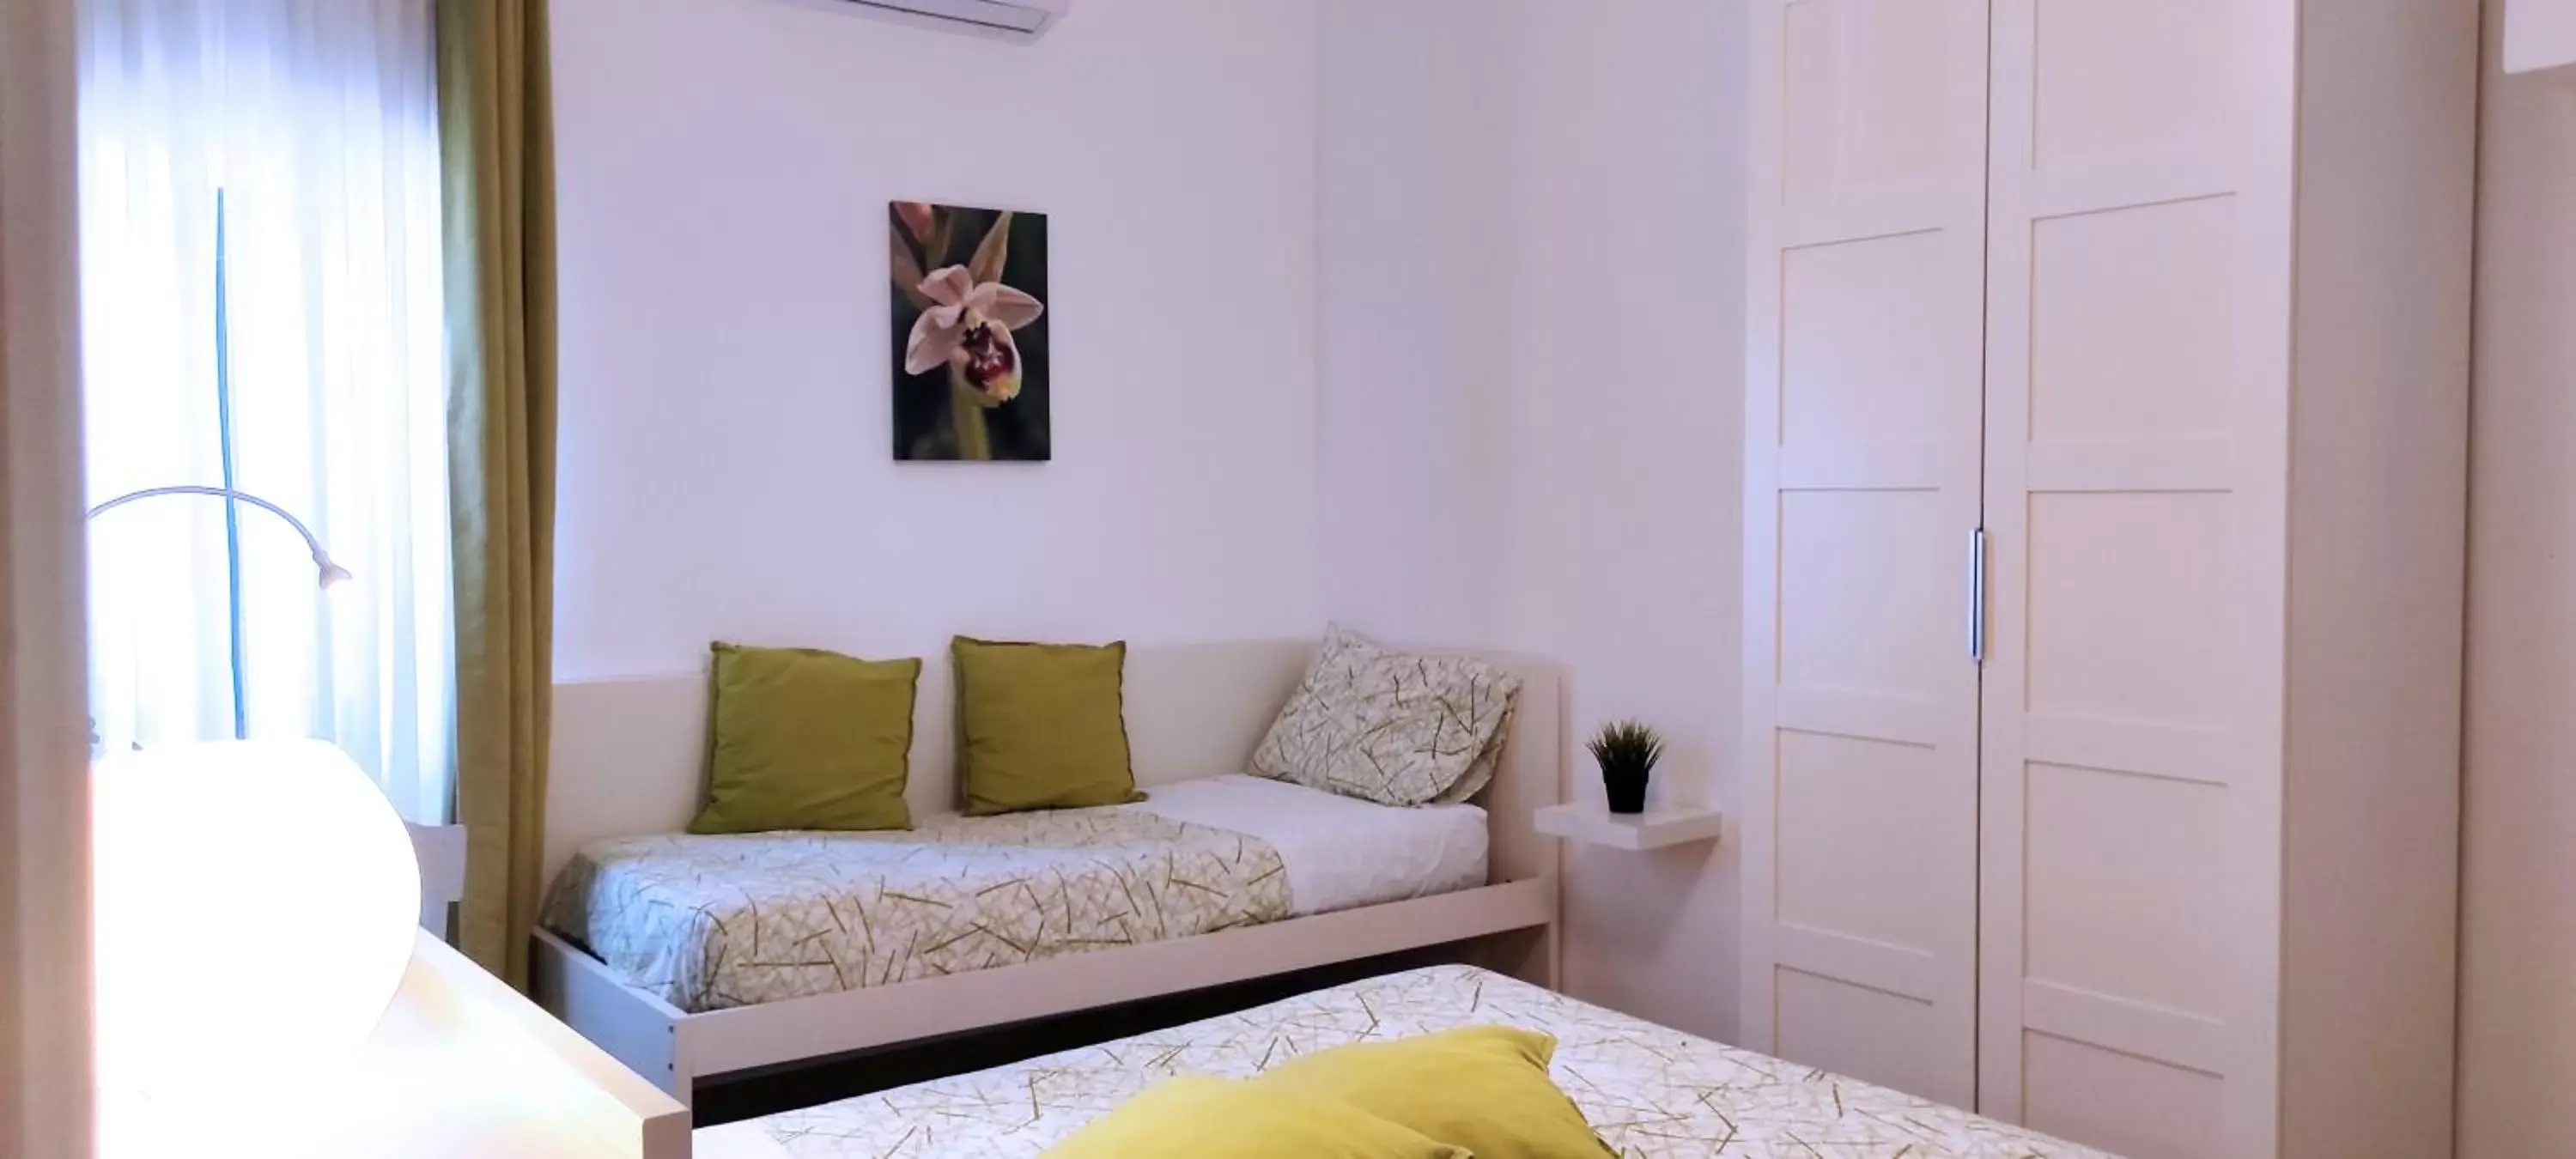 Bedroom, Seating Area in Apulia Bed&Breakfast